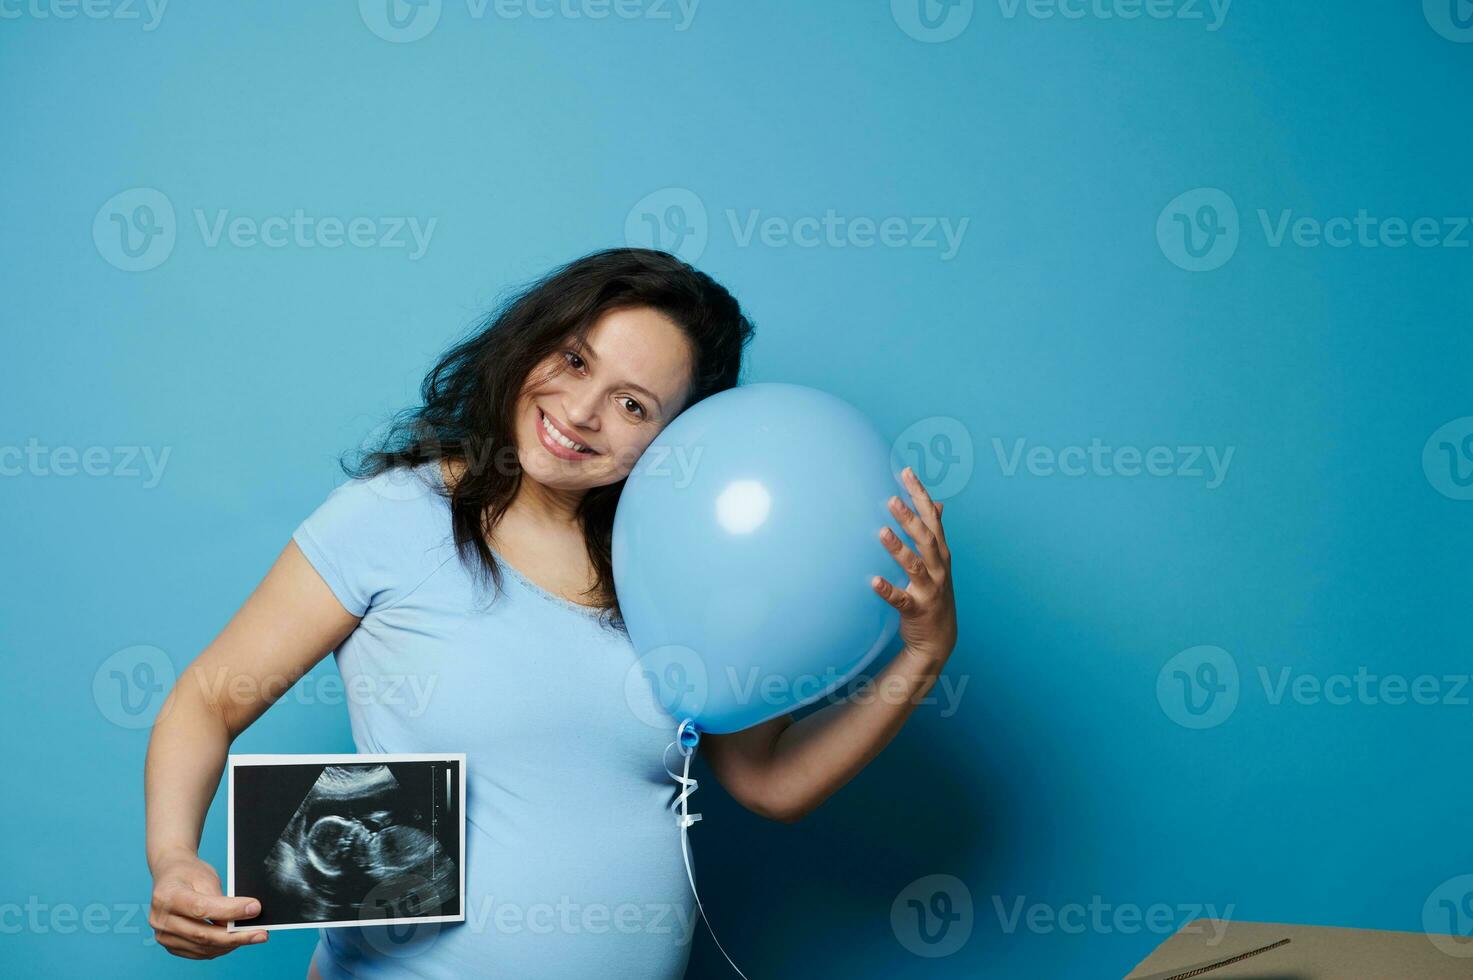 content Enceinte femme en portant bleu ballon et ultrason analyse de sa futur bébé garçon, isolé Contexte. le sexe fête photo